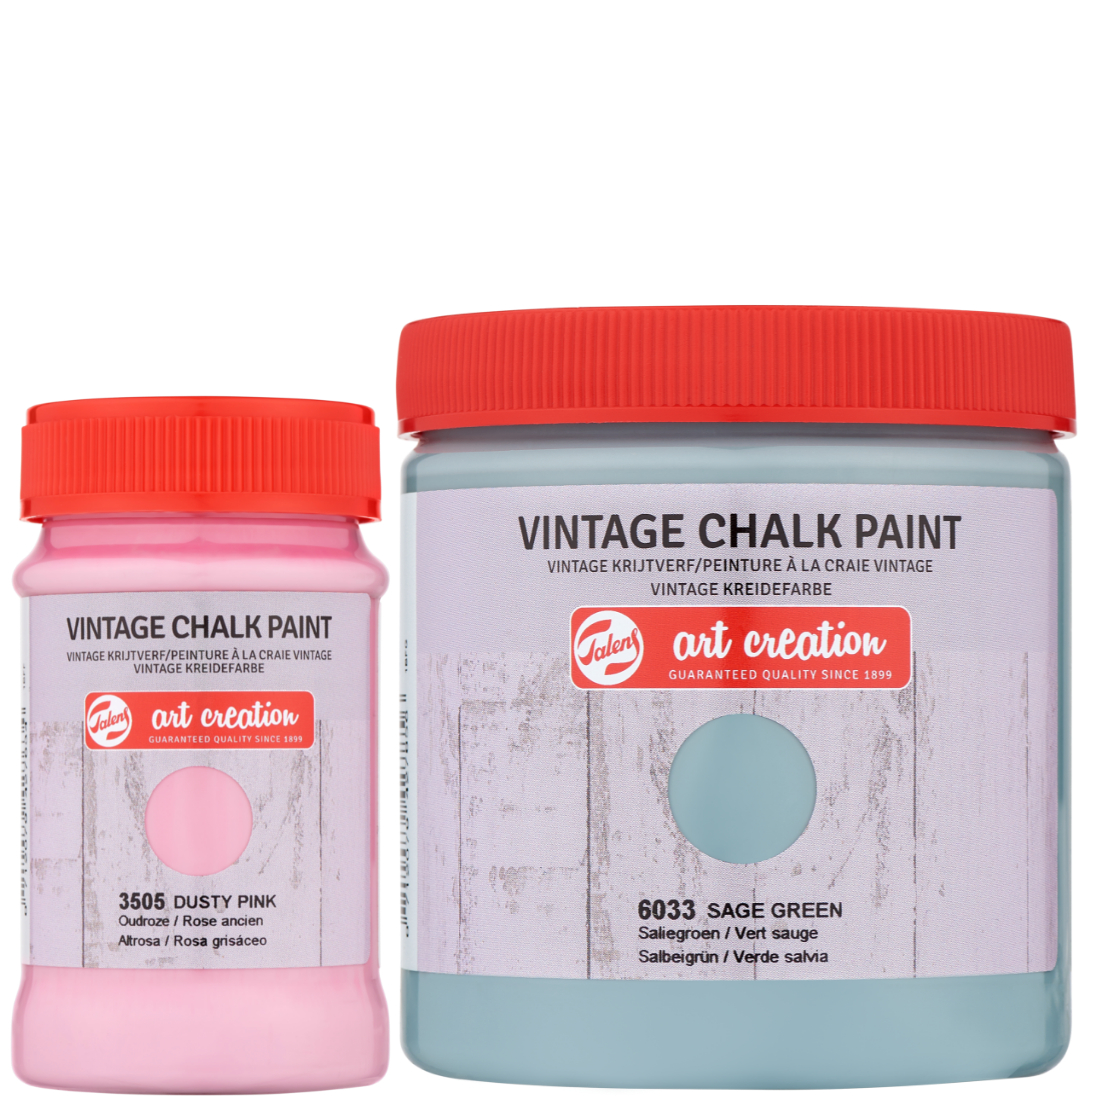 Acrílico Vintage Chalk Paint Art Creation royal talens